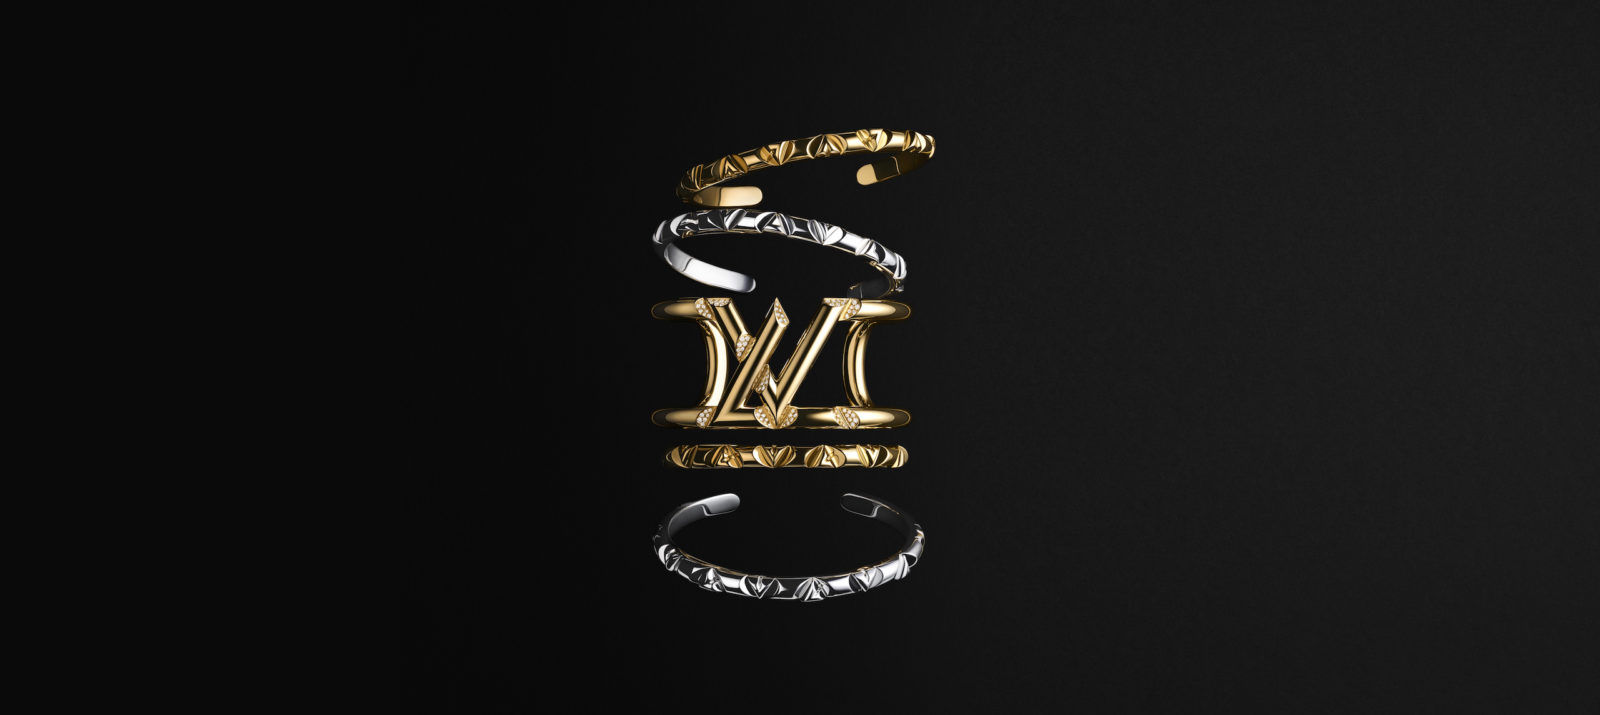 Louis vuitton LV ring men man gems | 3D Print Model